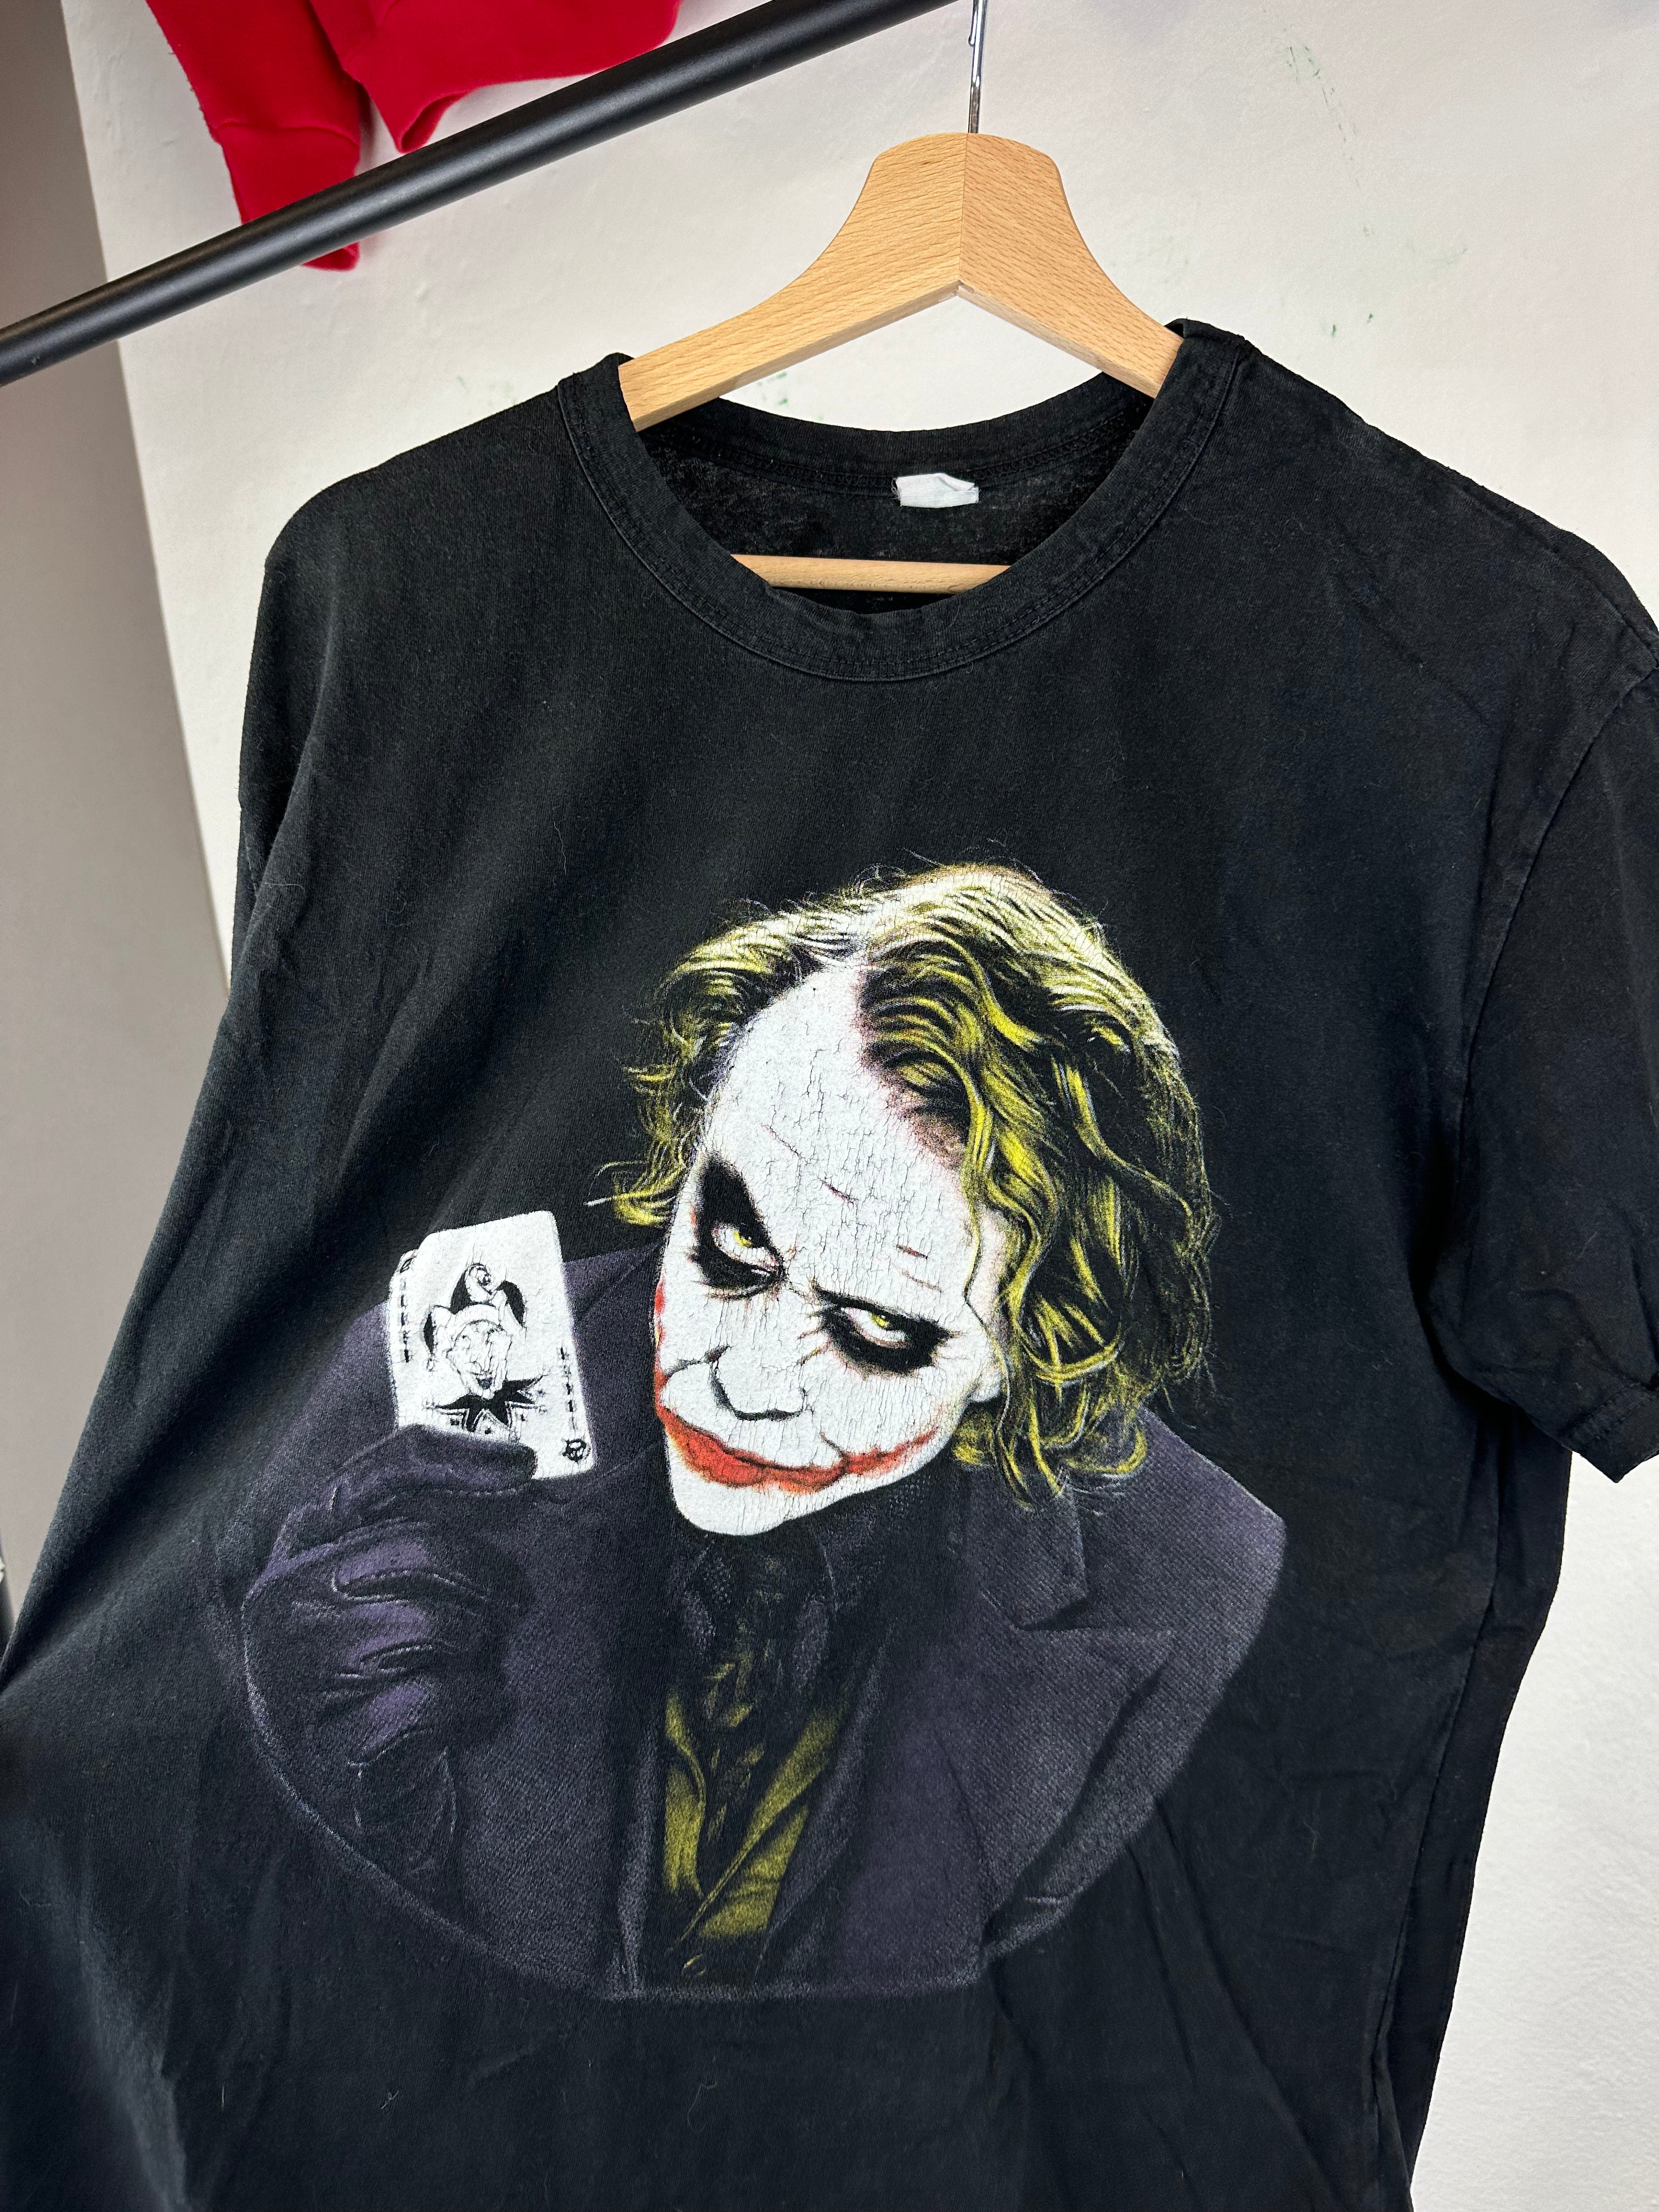 Vintage Batman "Joker" T-shirt - size M/L